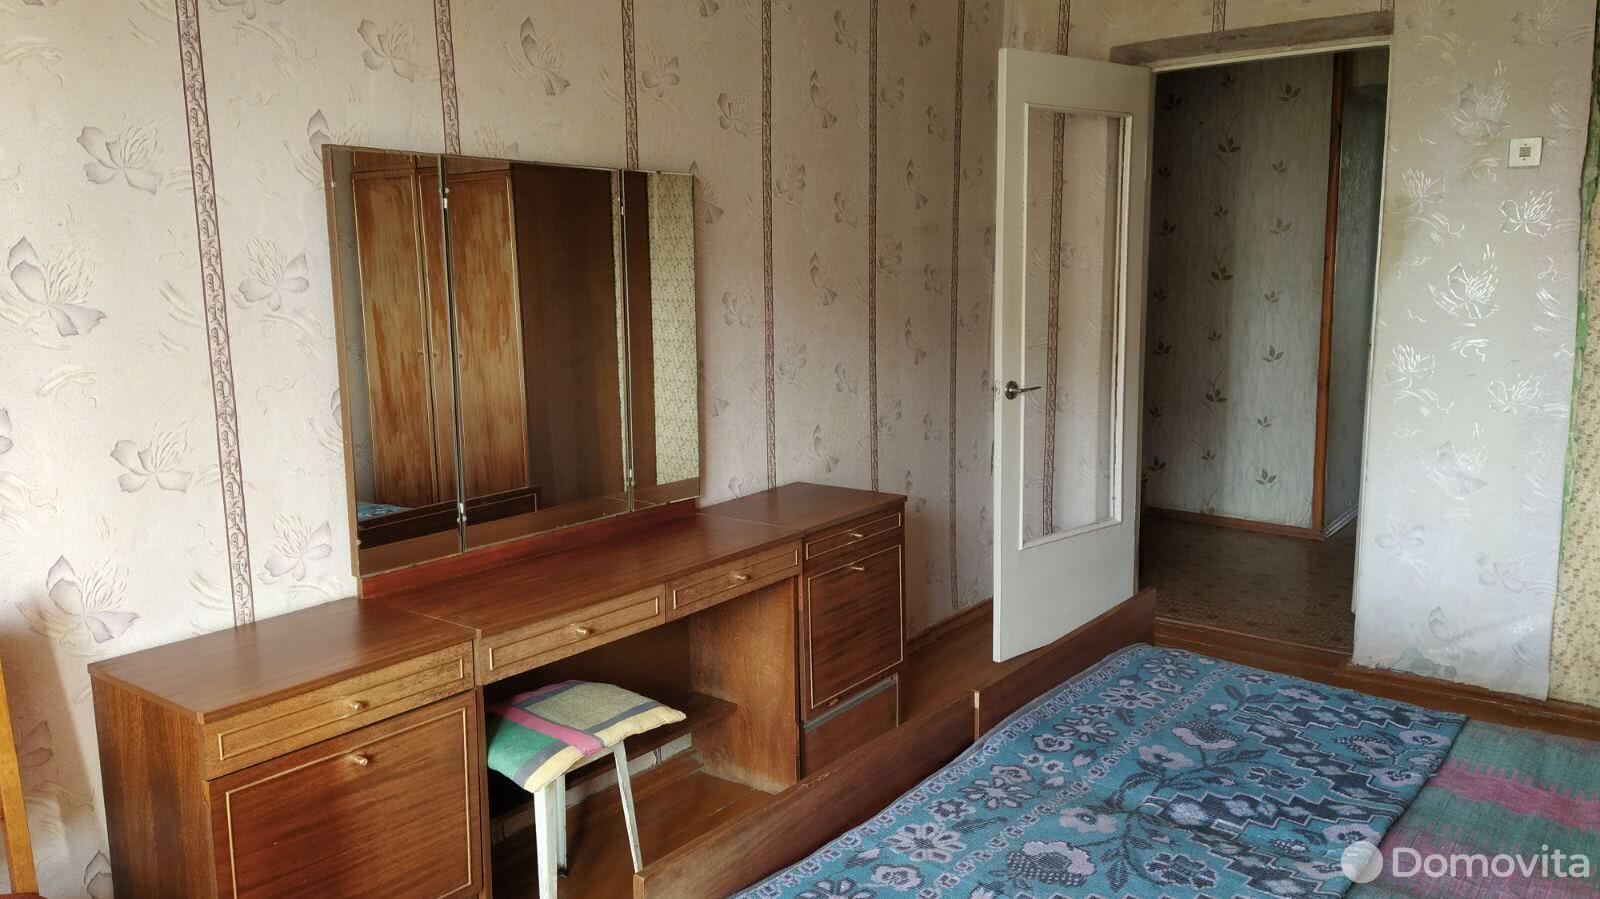 комната, Борисов, ул. Чапаева, д. 39, стоимость аренды 388 р./мес.